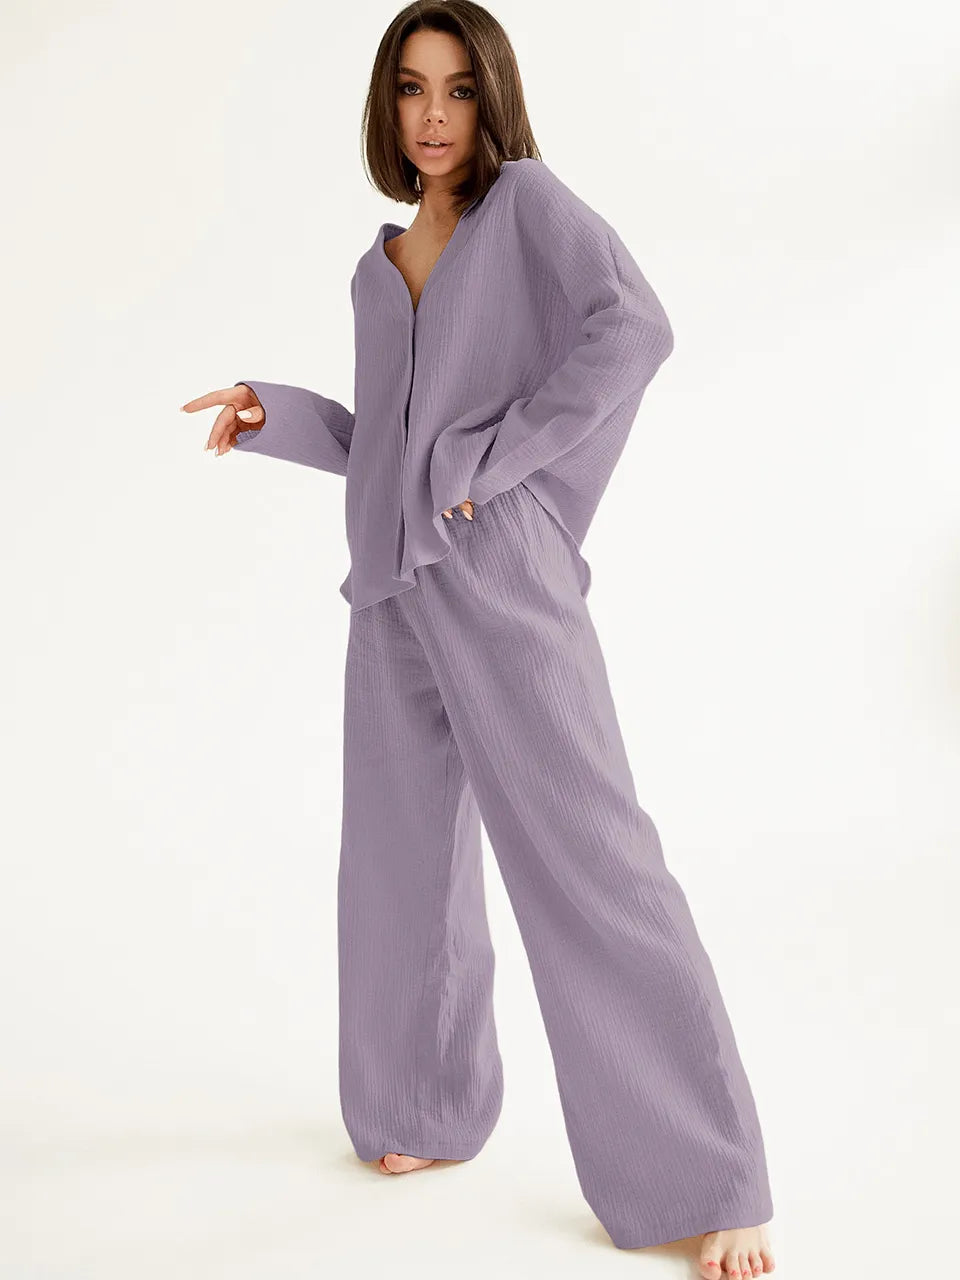 Linad Khaki Pure Cotton Sleepwear V Neck Single Breasted Wide Leg Pants Trouser Suits Drop Sleeves Set Woman 2 Pieces Loungewear